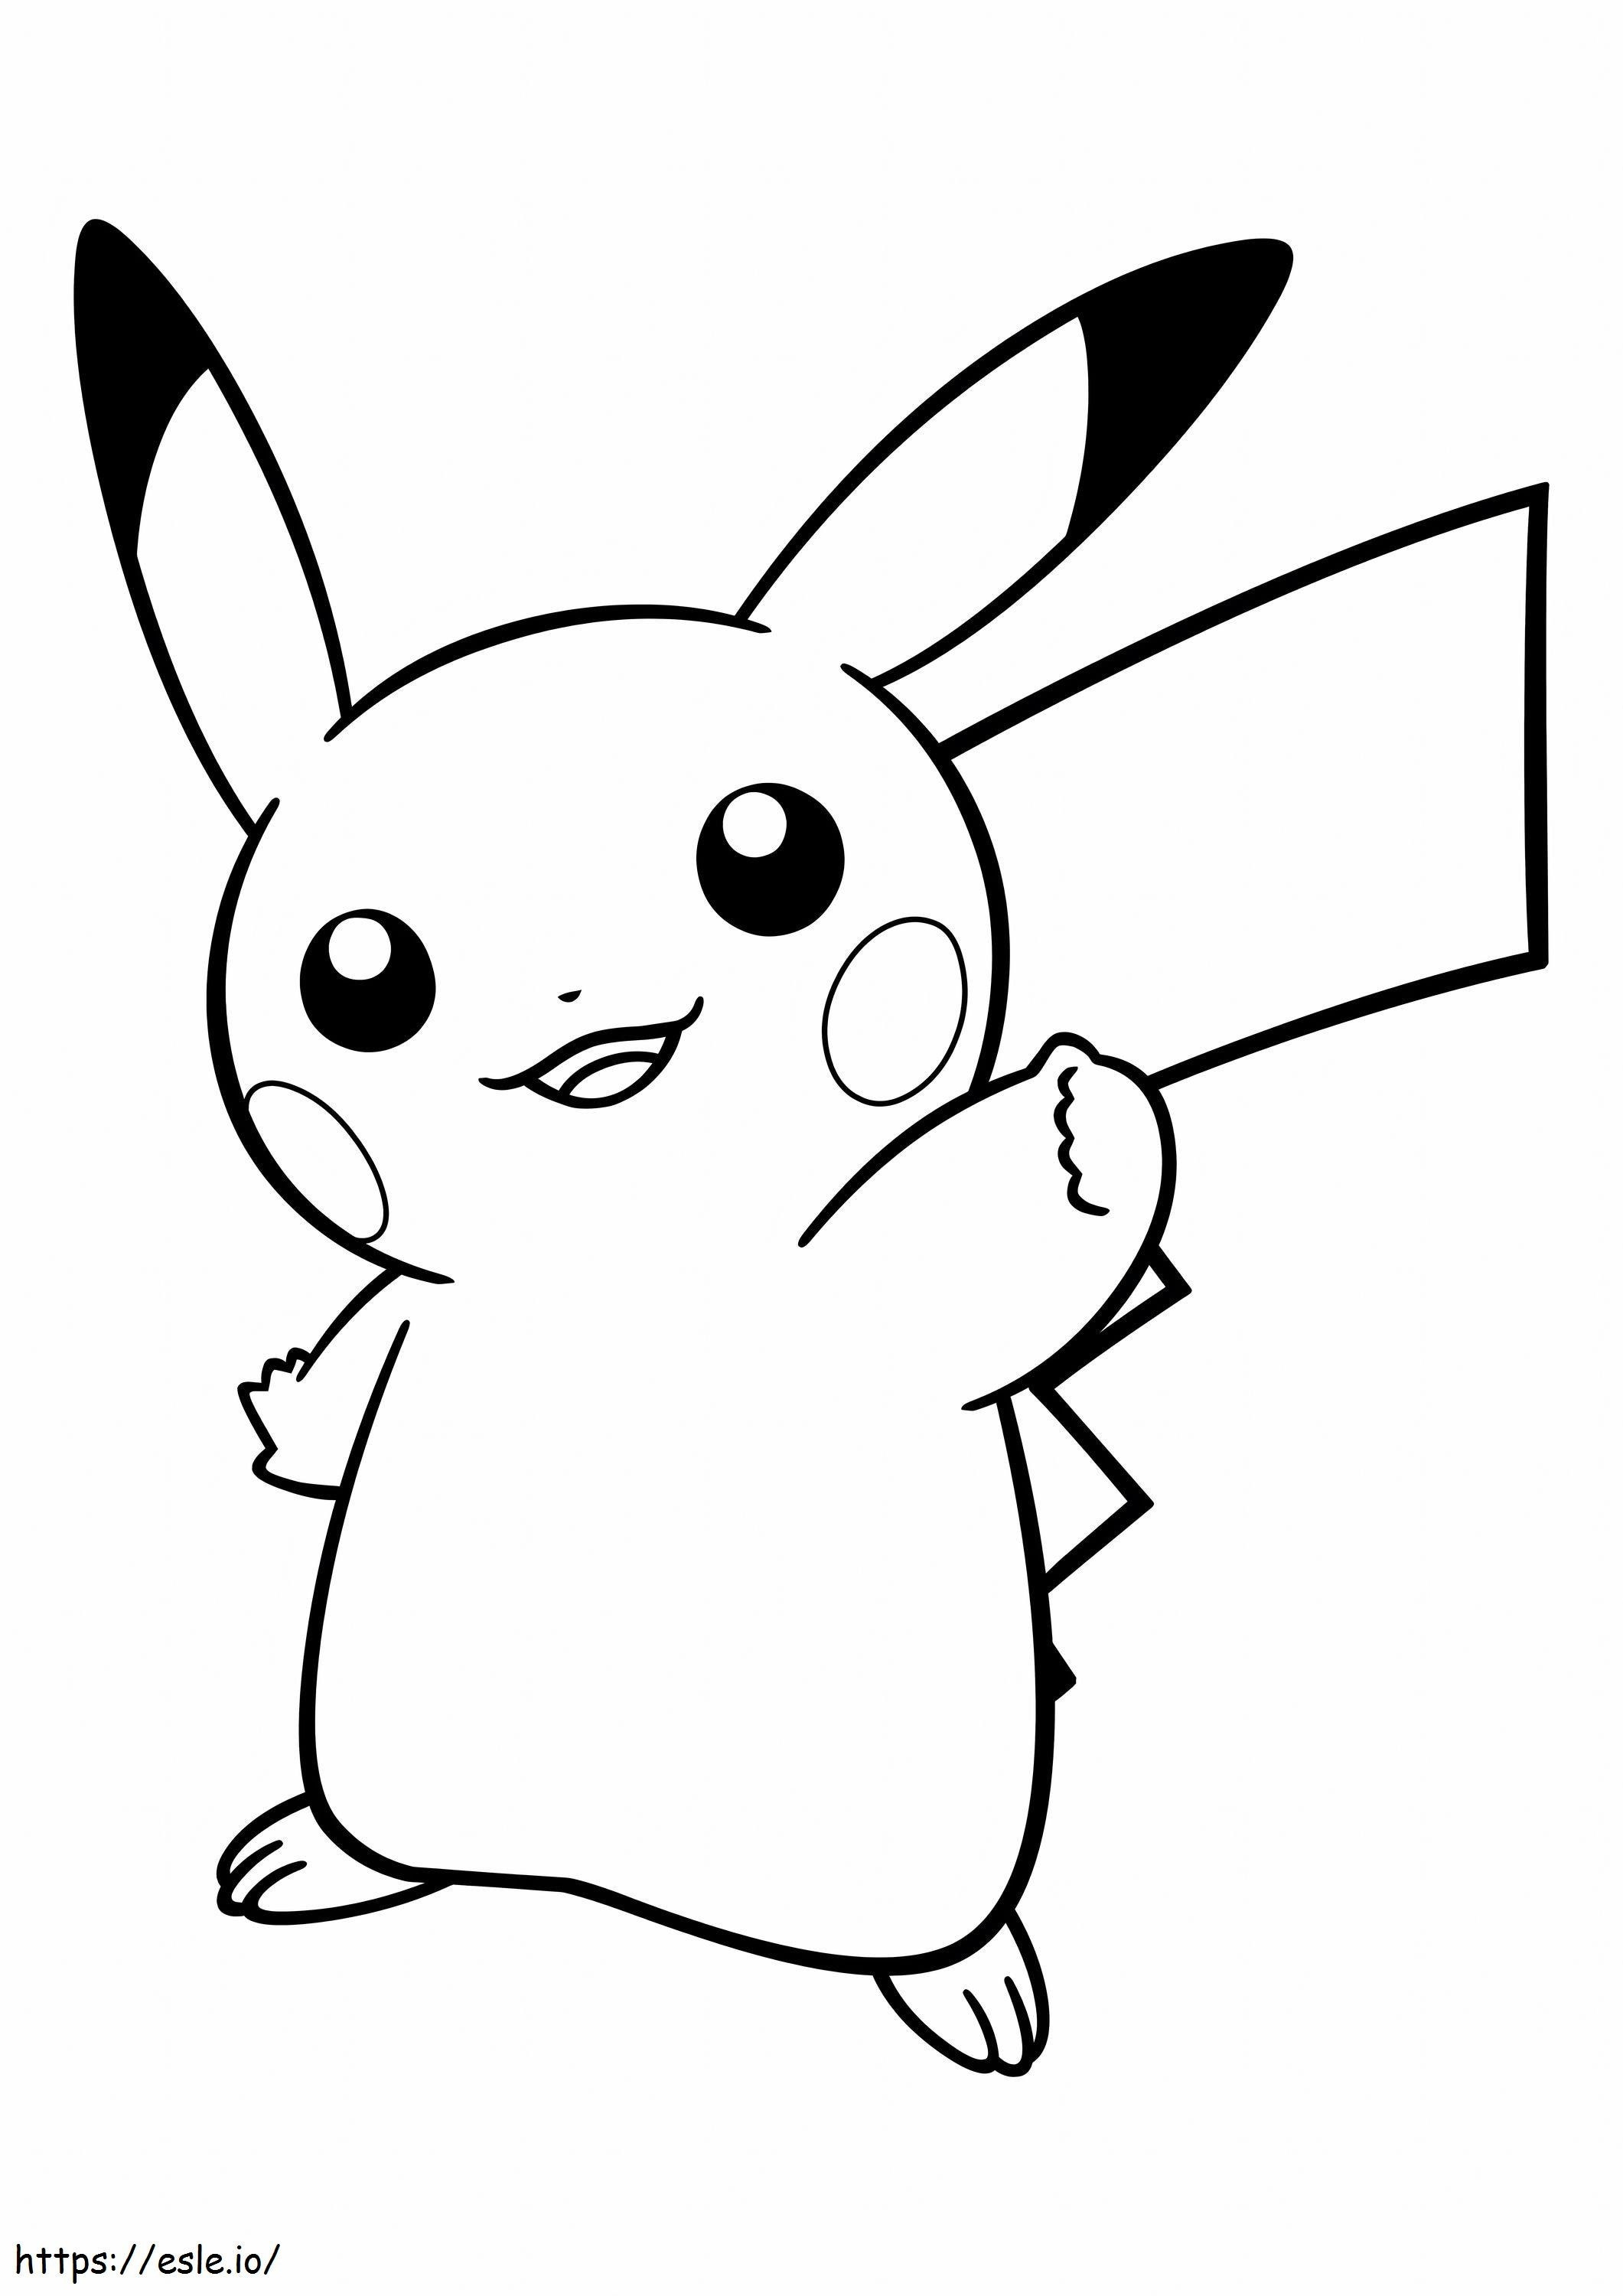 Lustiges Pikachu ausmalbilder